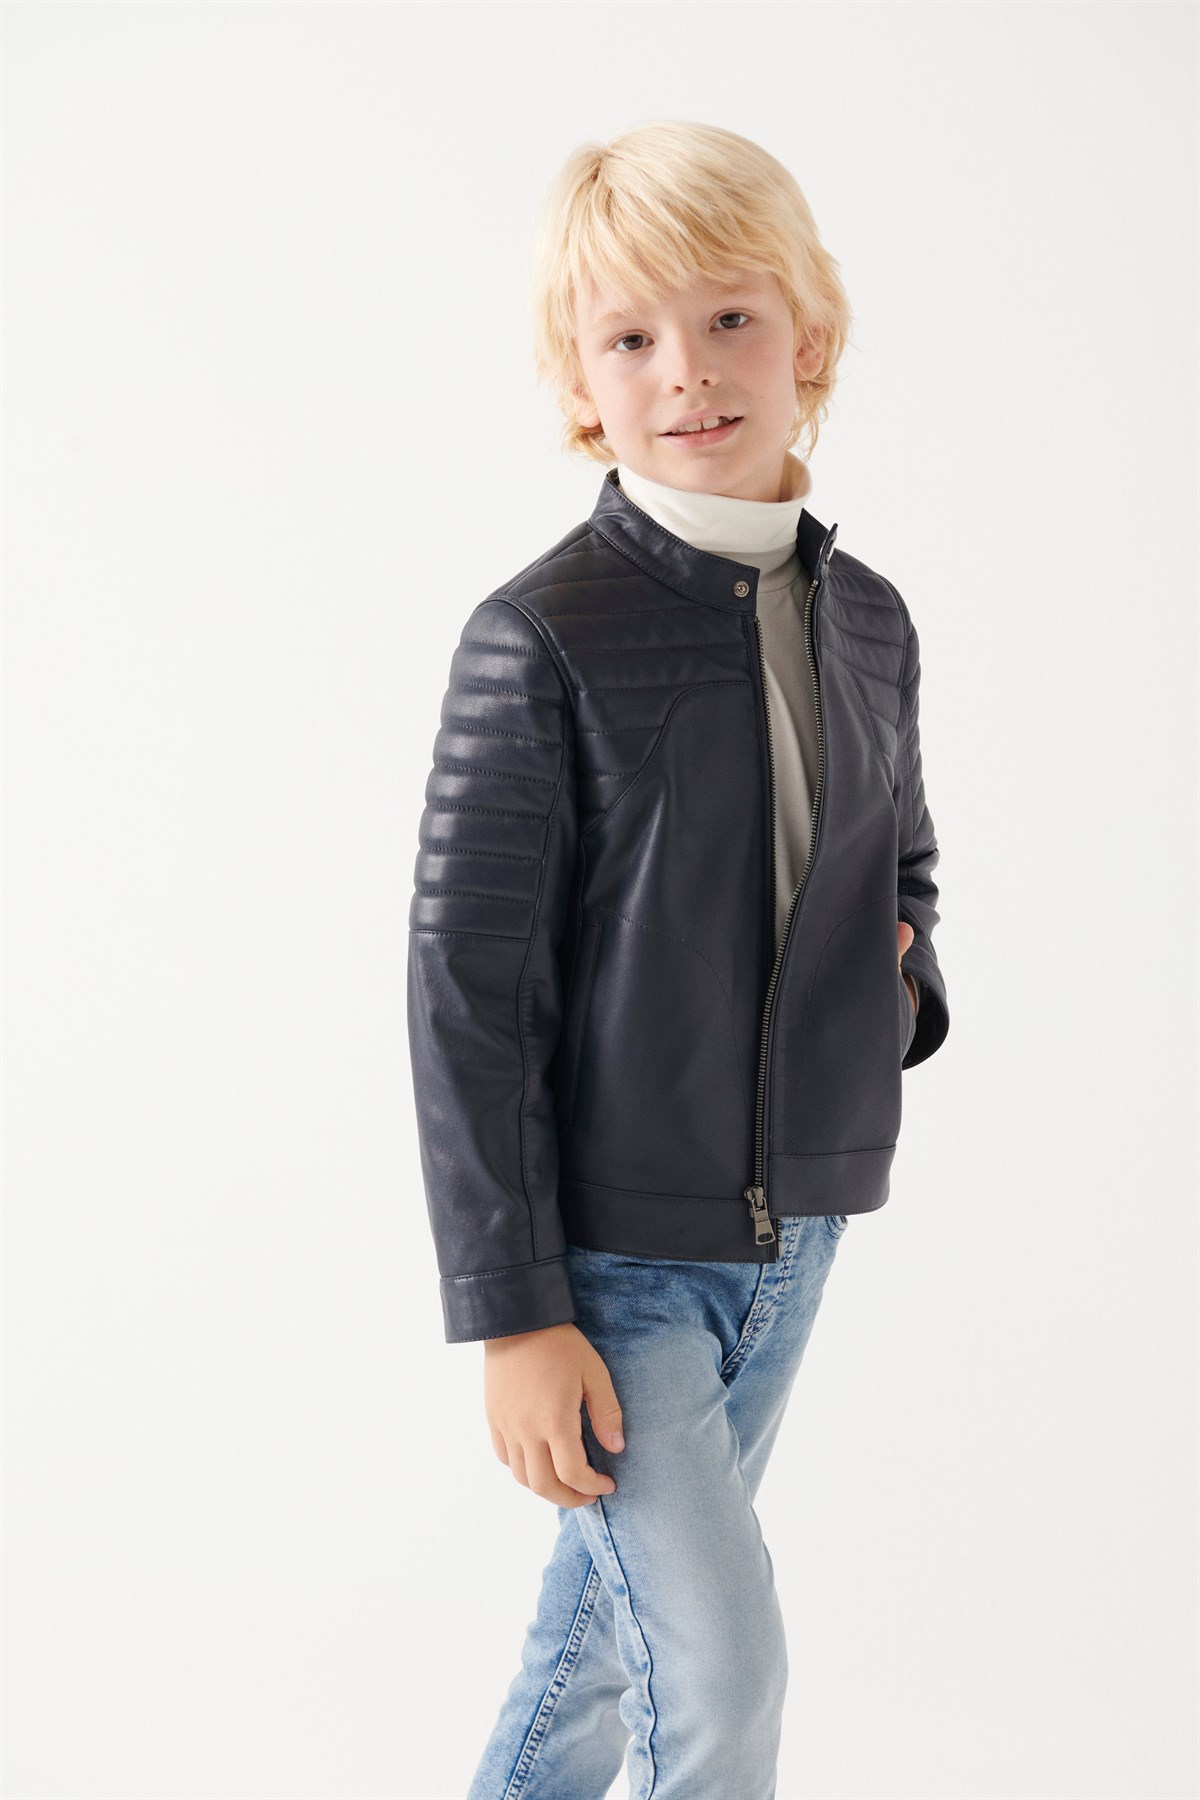 FRED Boys Navy Blue Leather Jacket | Boys Leather and Shearling Jacket &  Coat